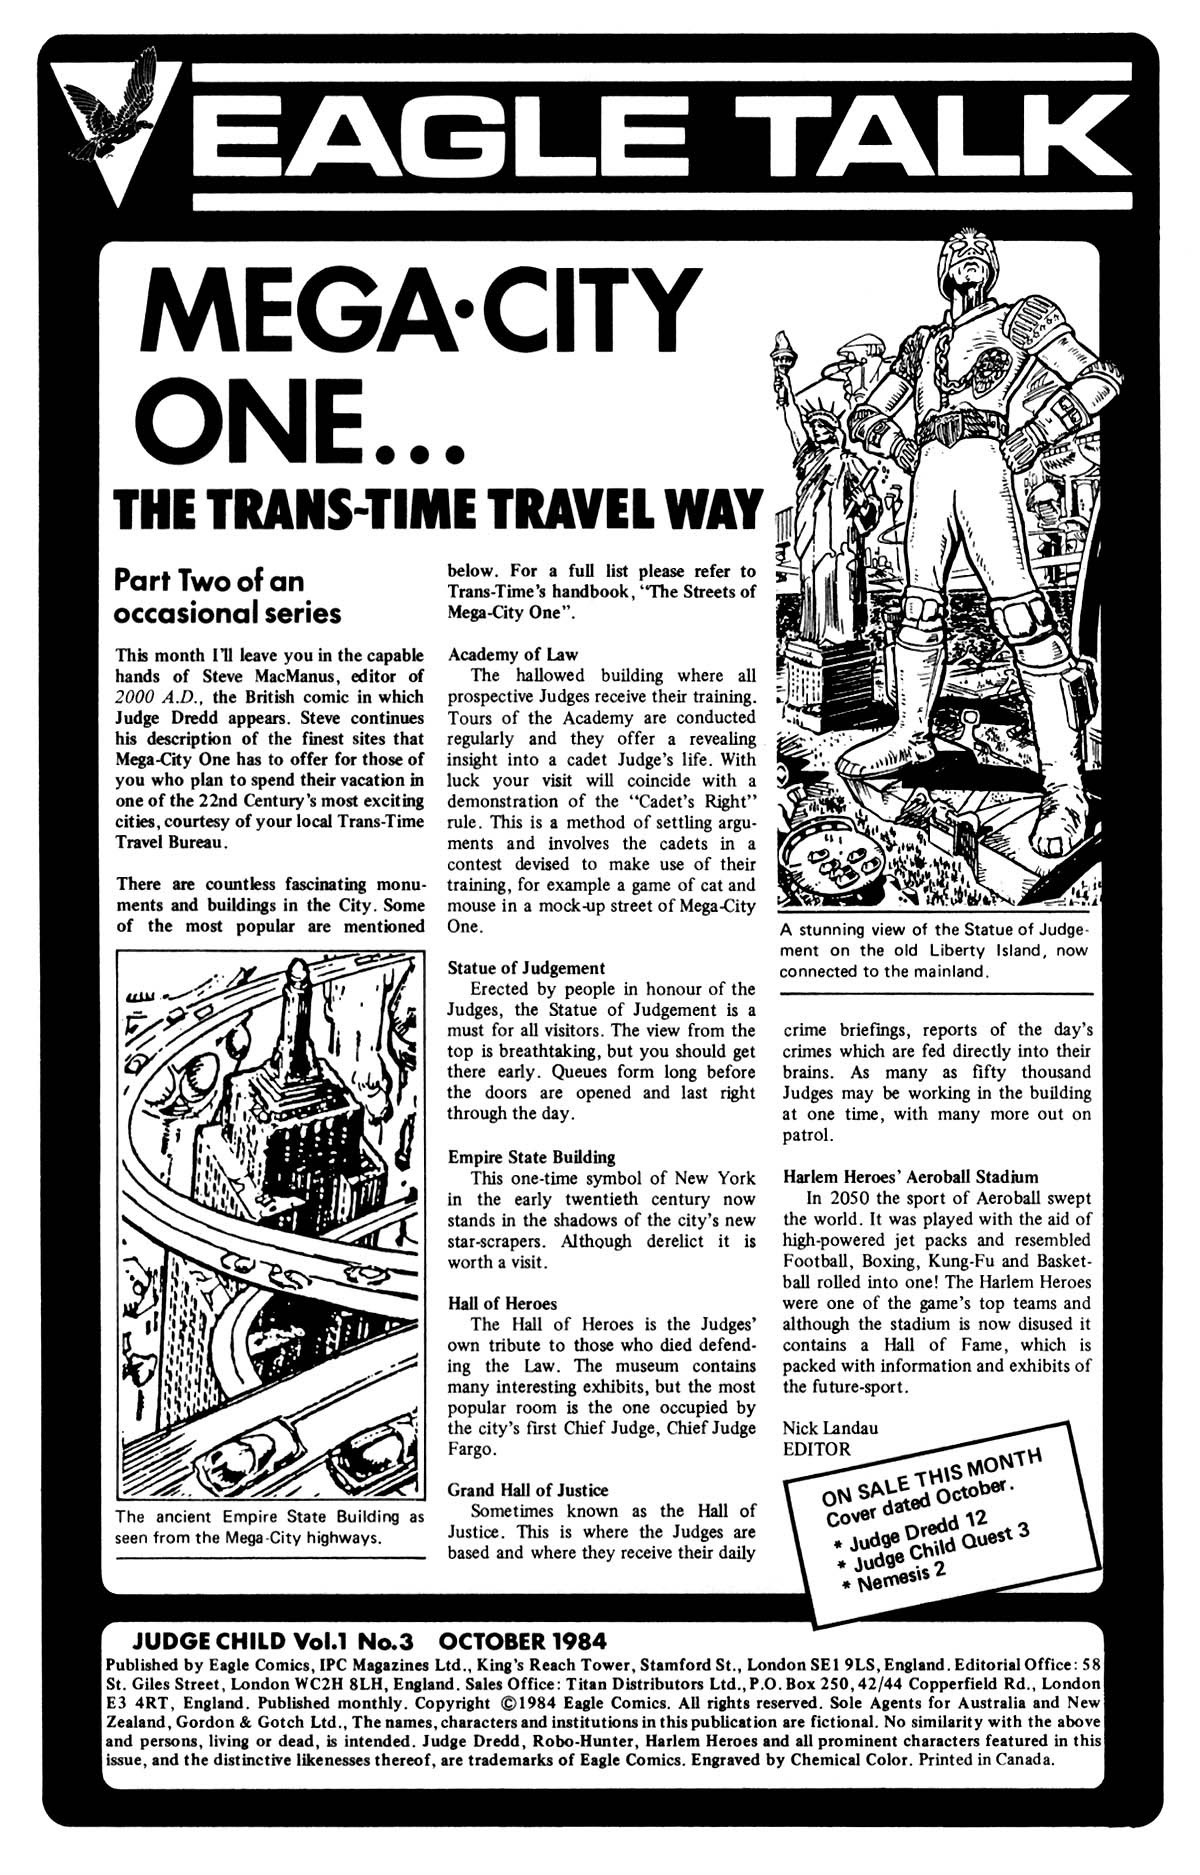 Read online Judge Dredd: The Judge Child Quest comic -  Issue #3 - 2